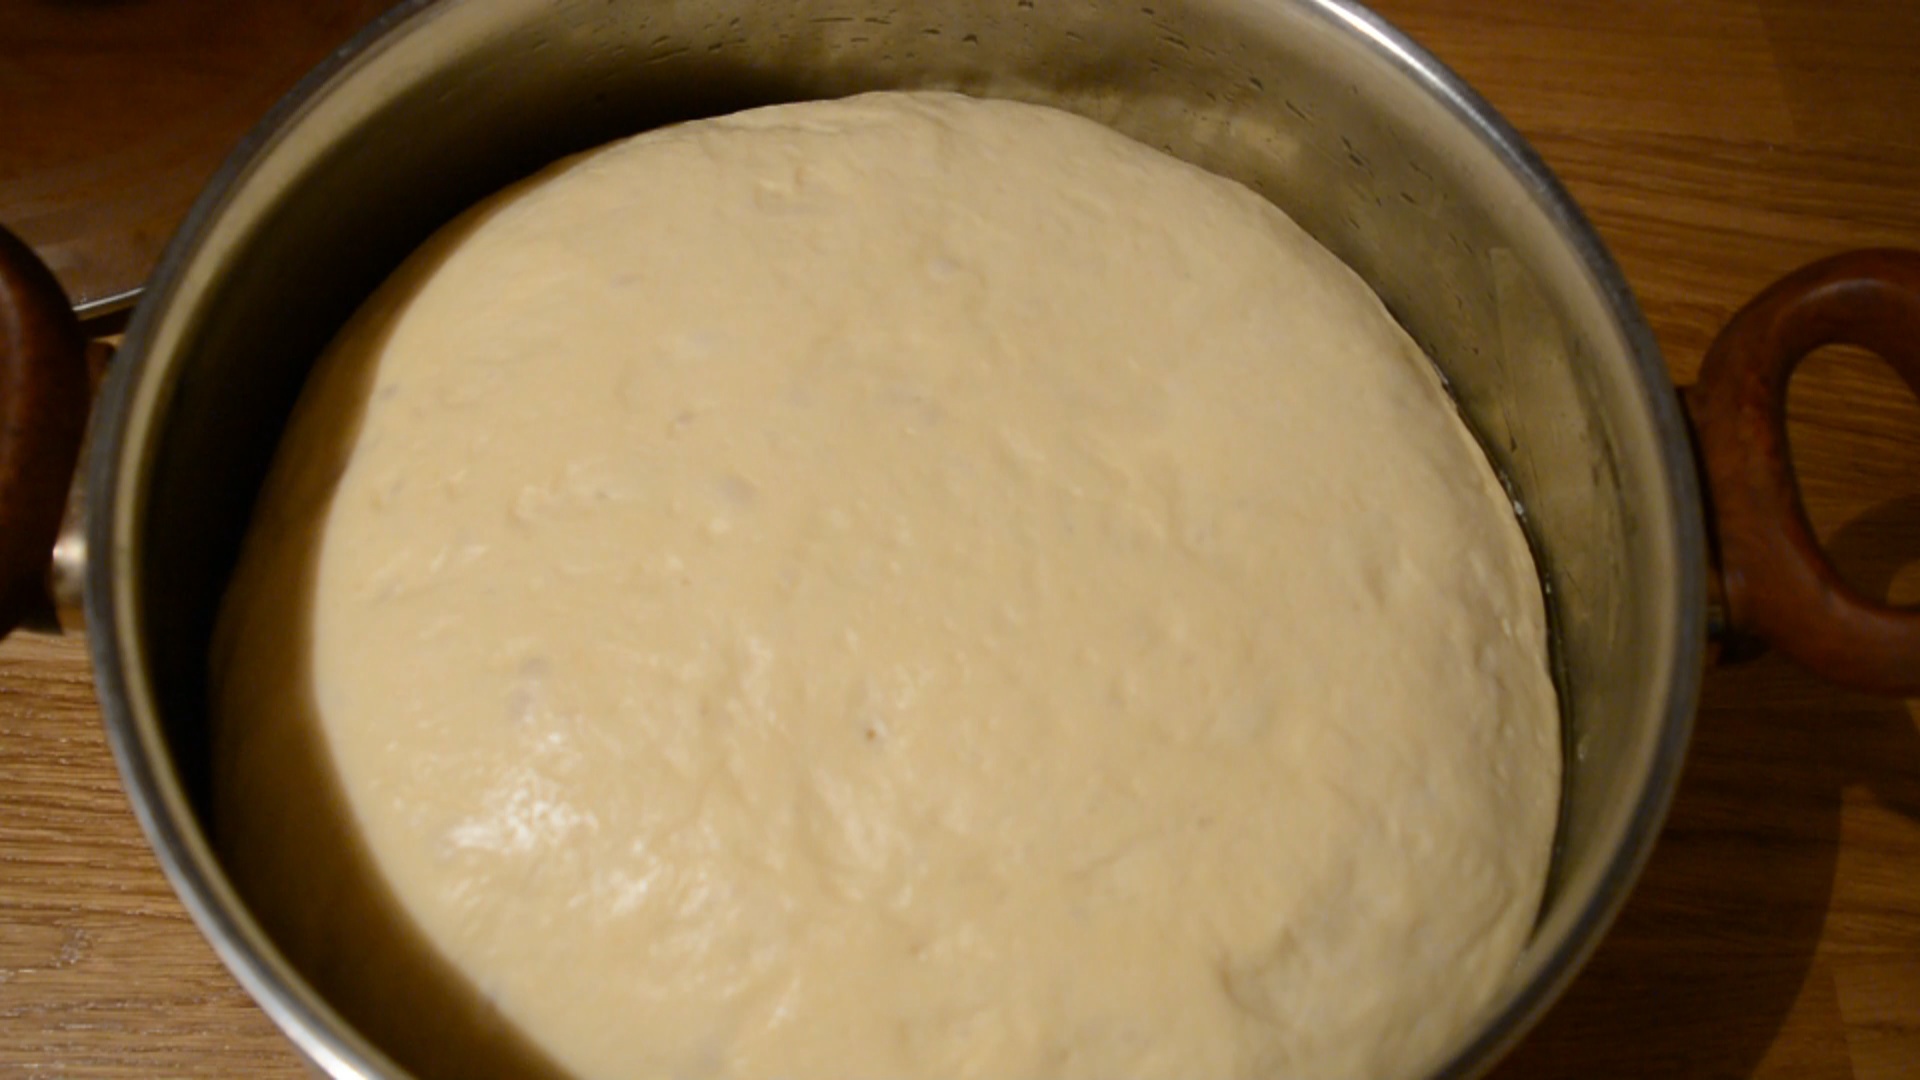 Как разморозить тесто дрожжевое. Можно замораживать дрожжевое тесто. Как разморозить тесто правильно. Как правильно заморозить дрожжевое тесто.